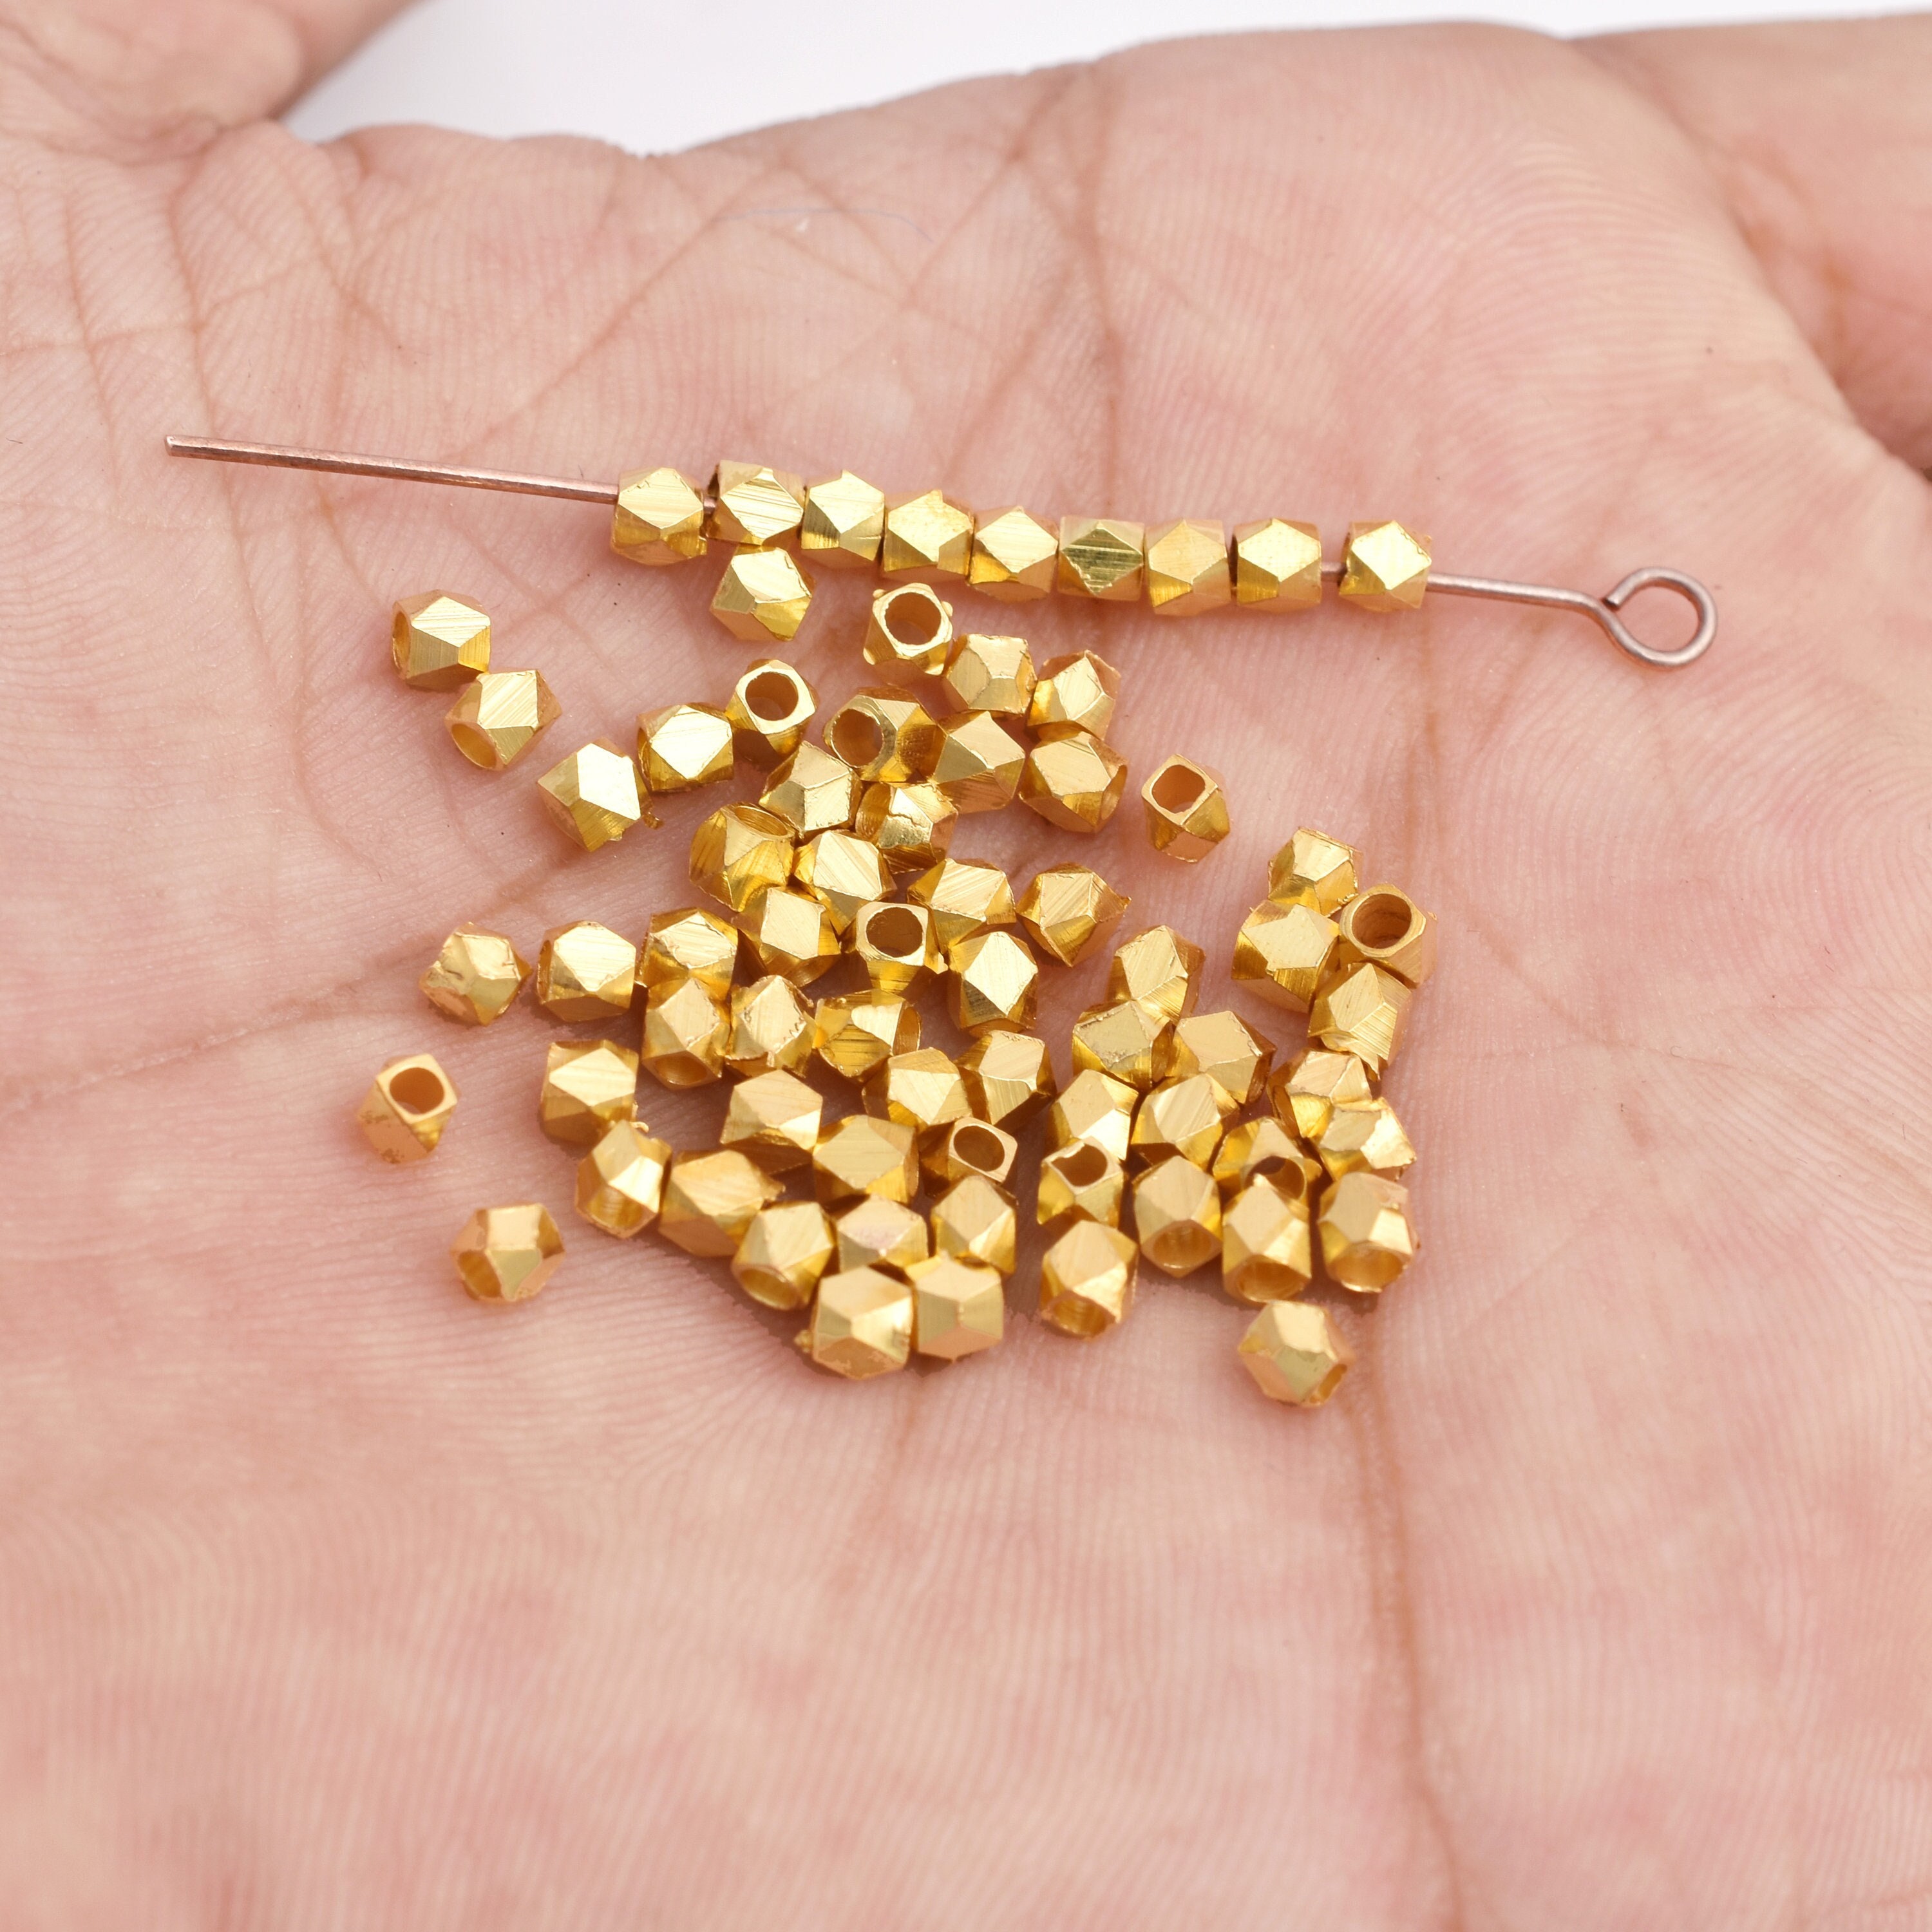 2mm, 3mm, 4mm, 6mm, 8mm Hematite Beads, Electroplated Golden Hematite Beads,  Spacer Beads, Jewelry Making Beads, Gold Hematite 